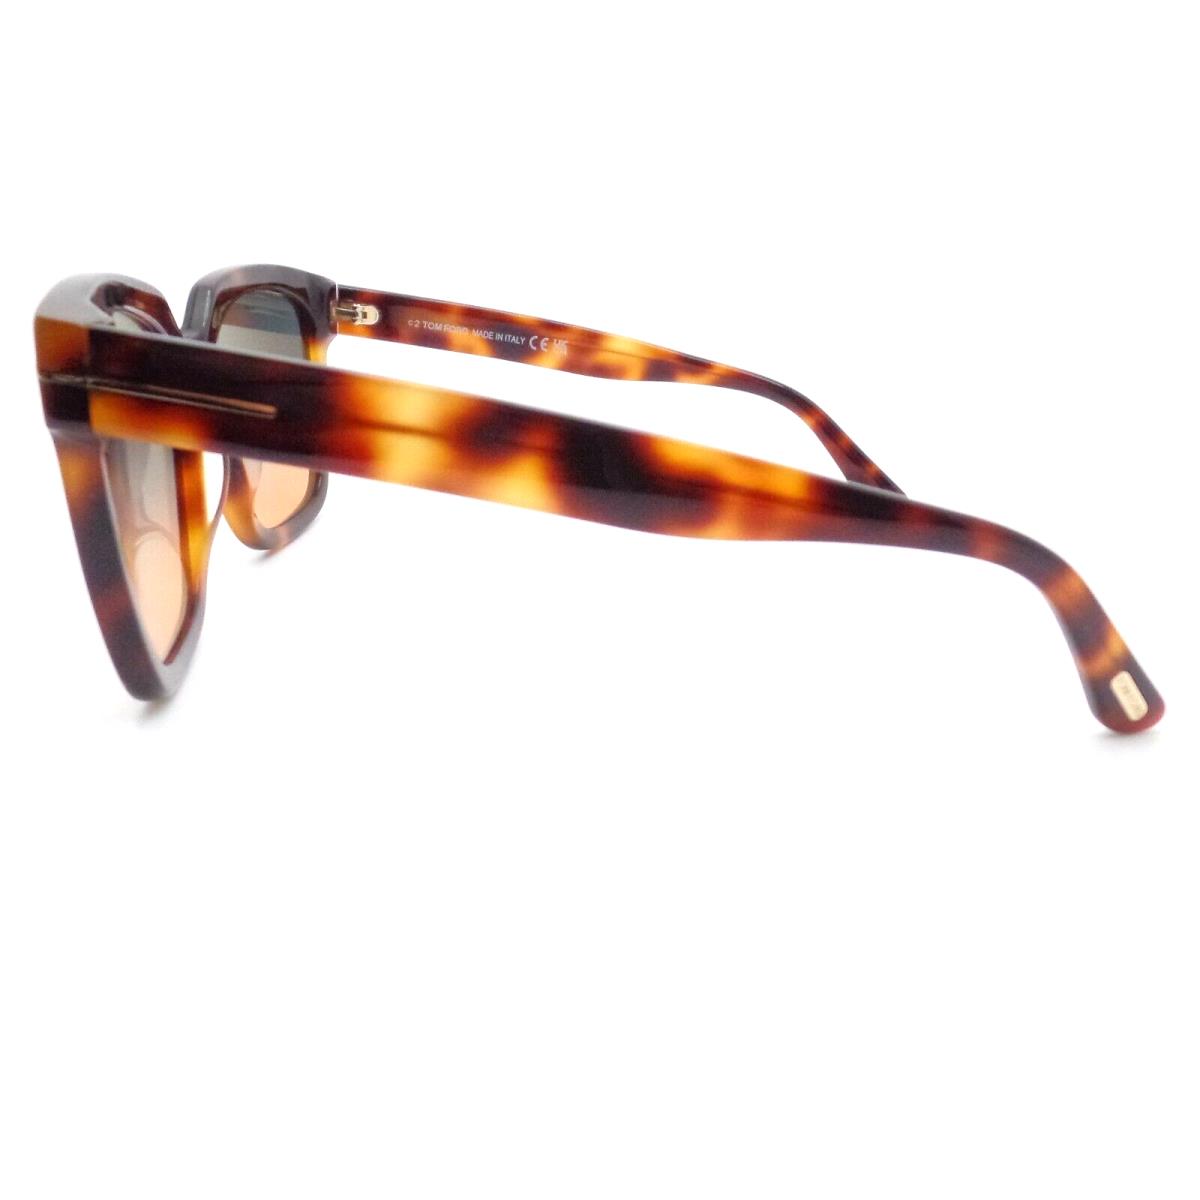 Tom Ford sunglasses Selby - Frame: Havana, Lens: Blue Teal Peach Fade 1